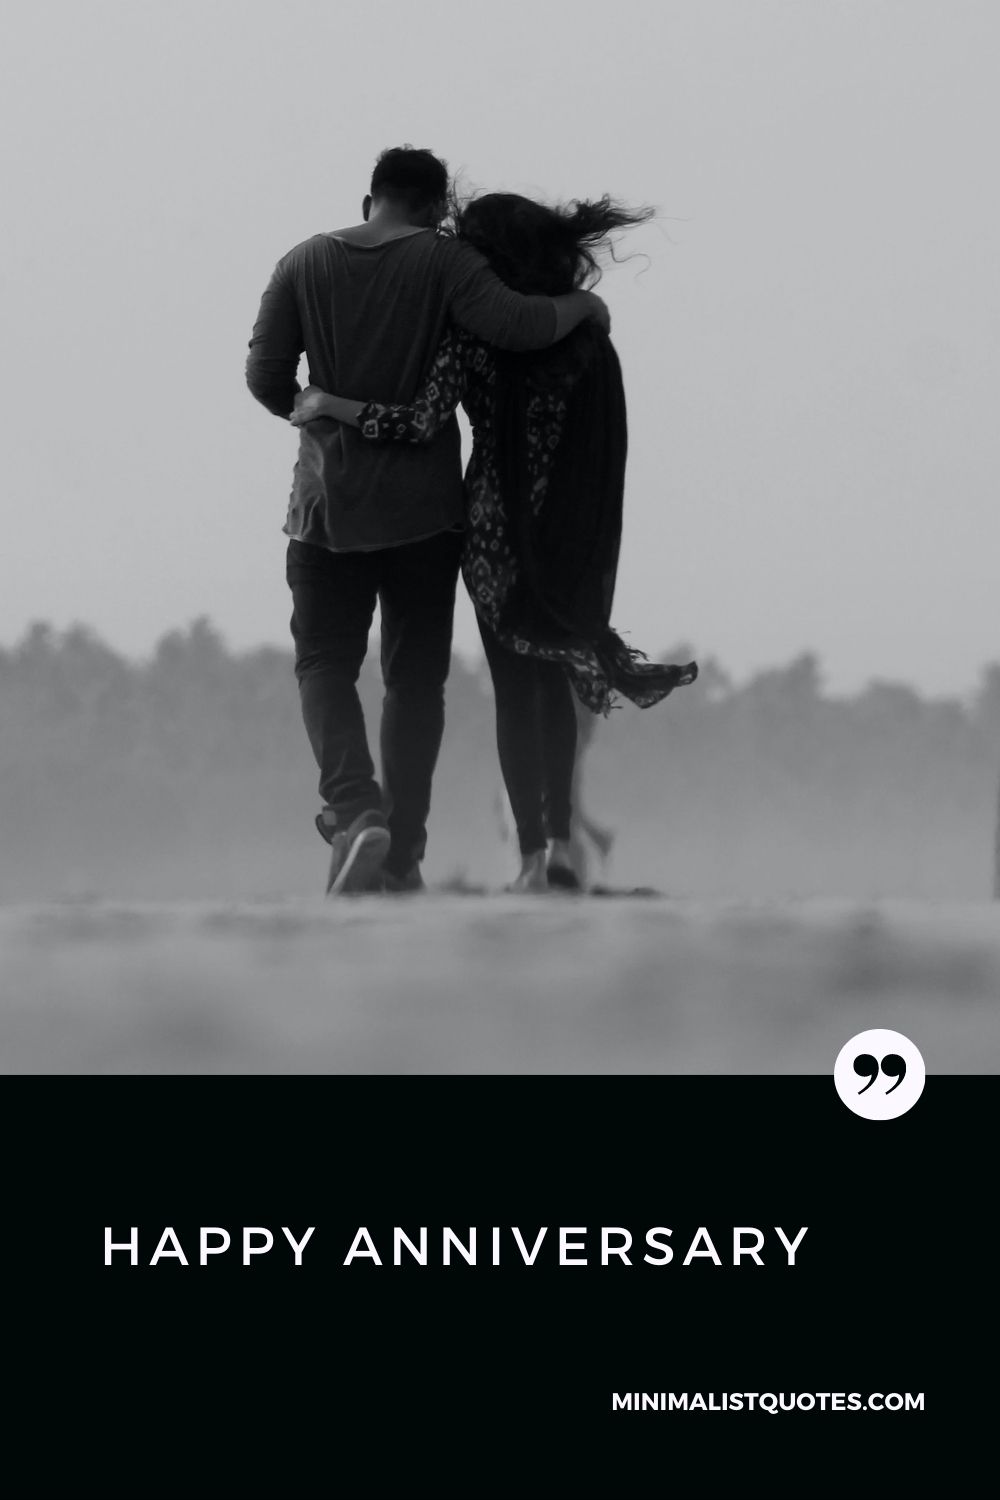 Happy Anniversary Wish & Card With Image: #couplewalk